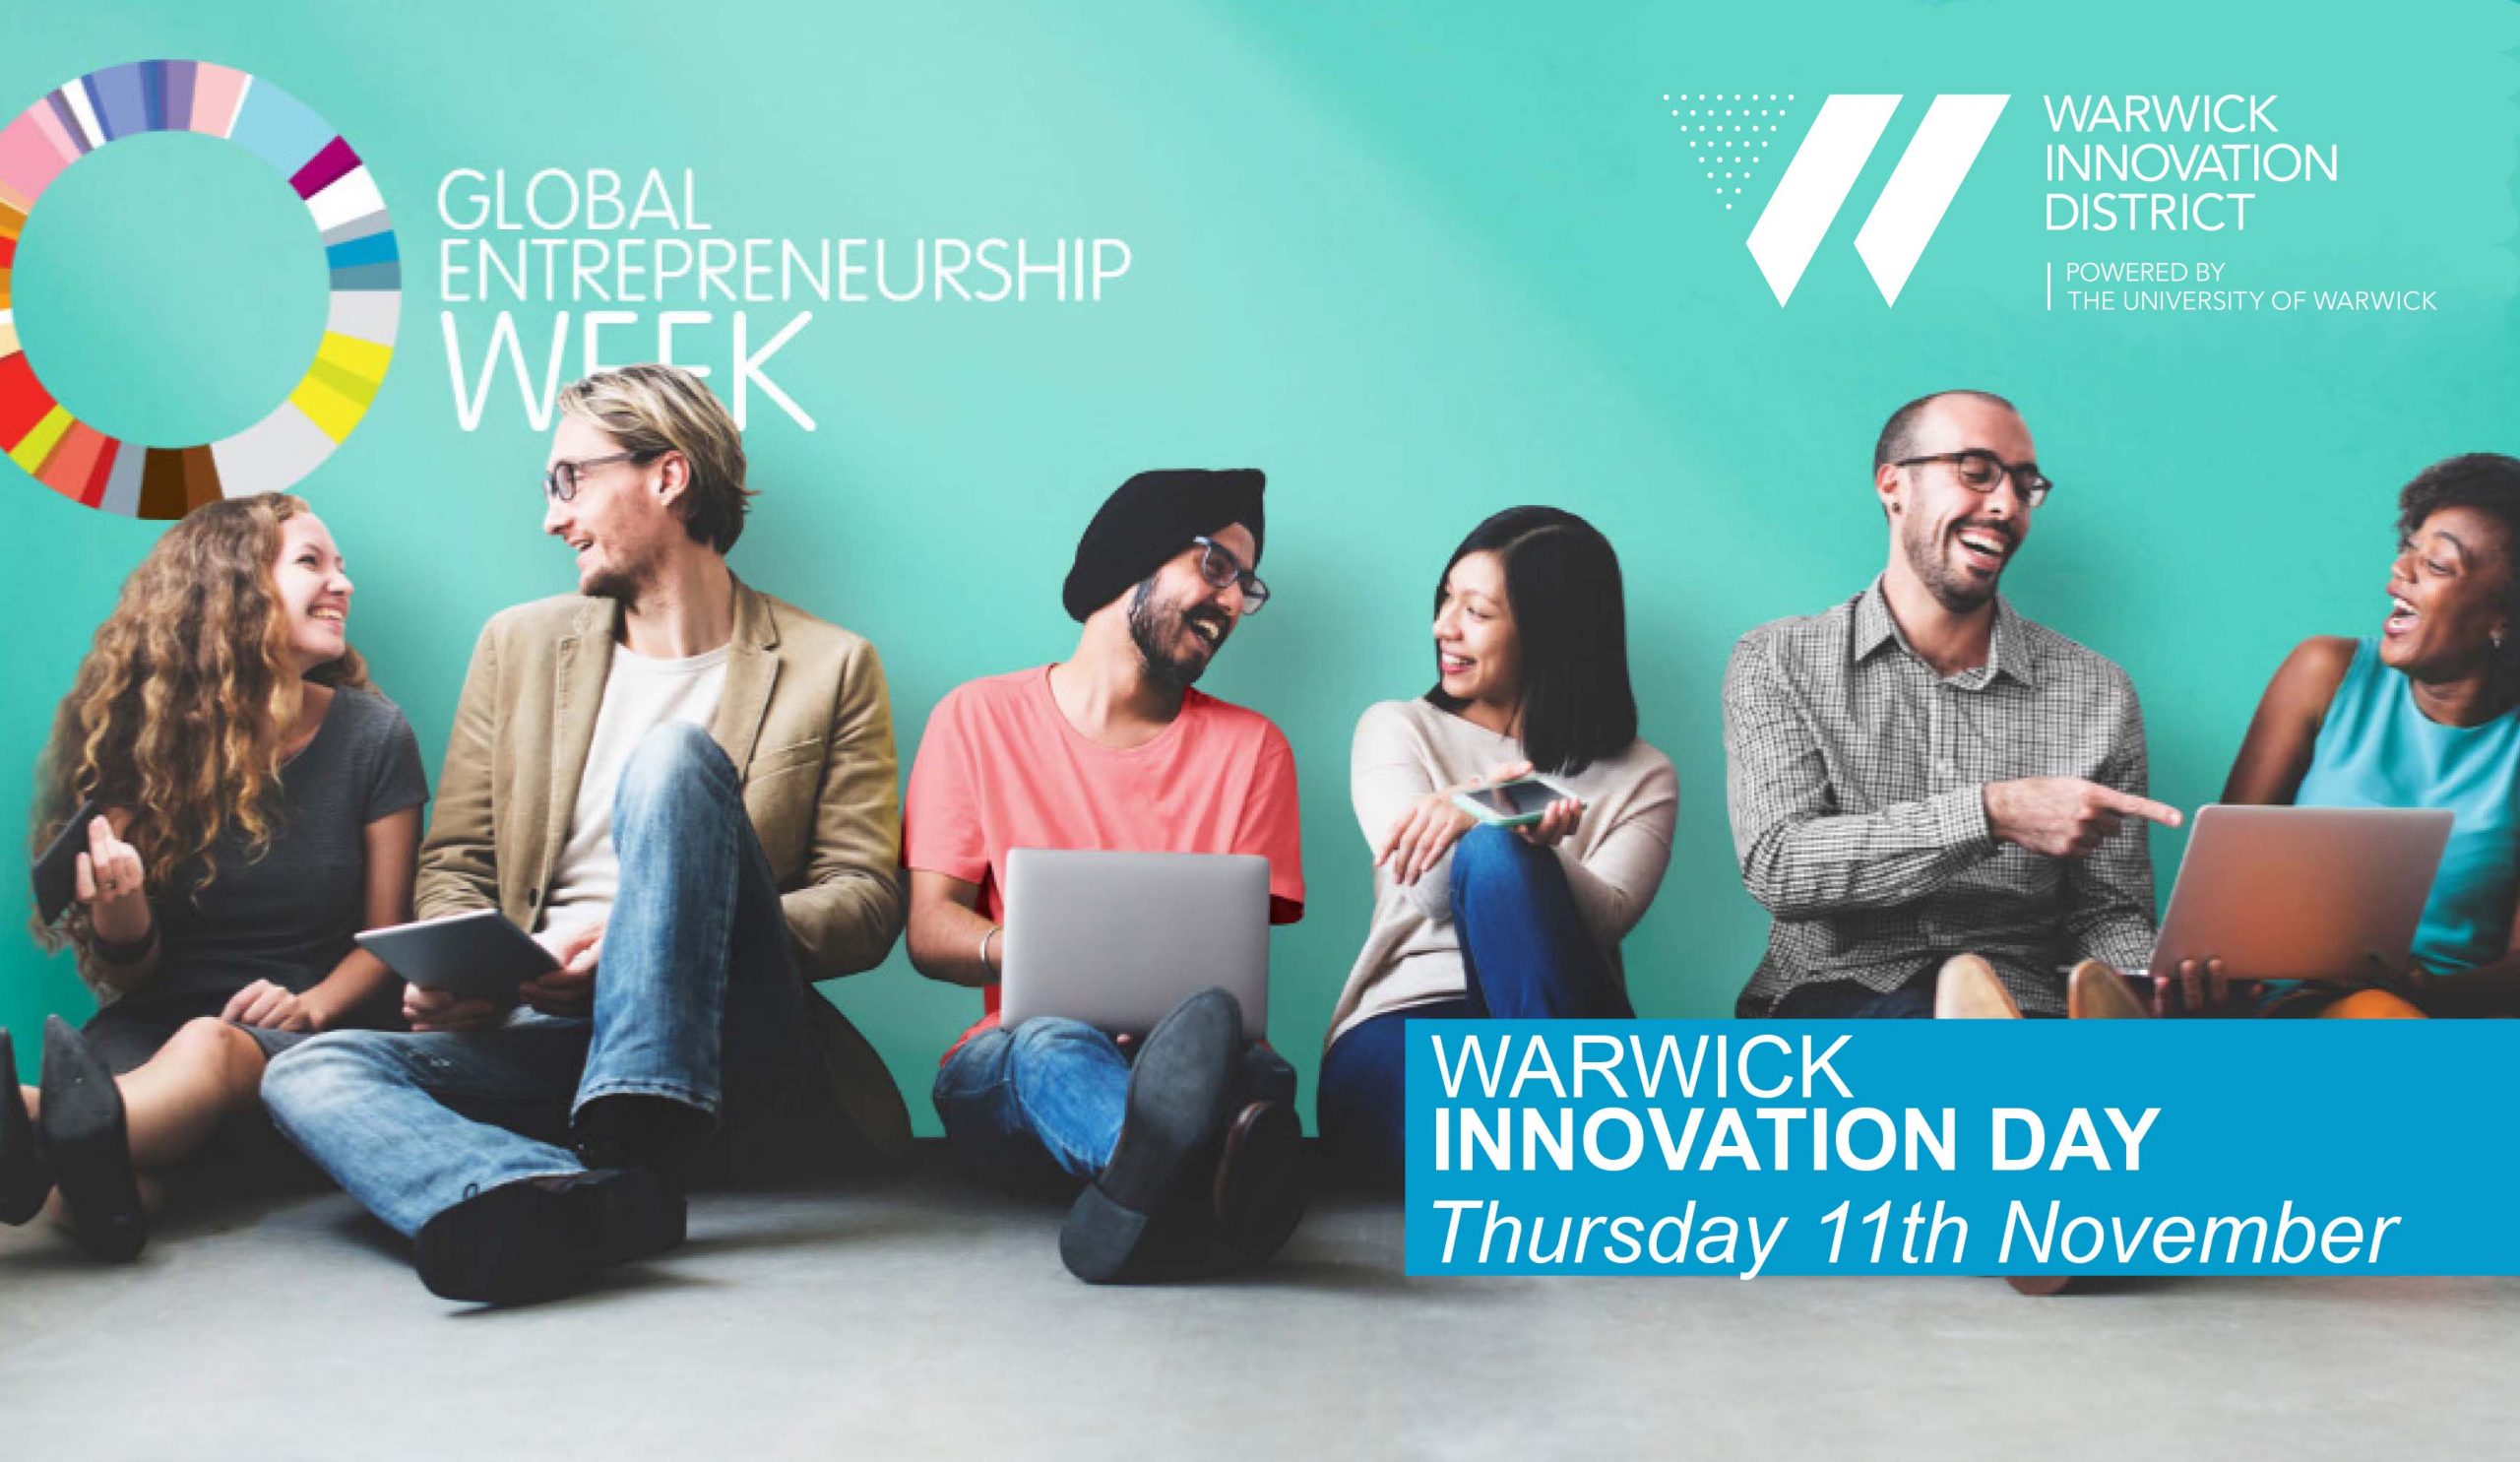 Global Entrepreneurship Week 2021